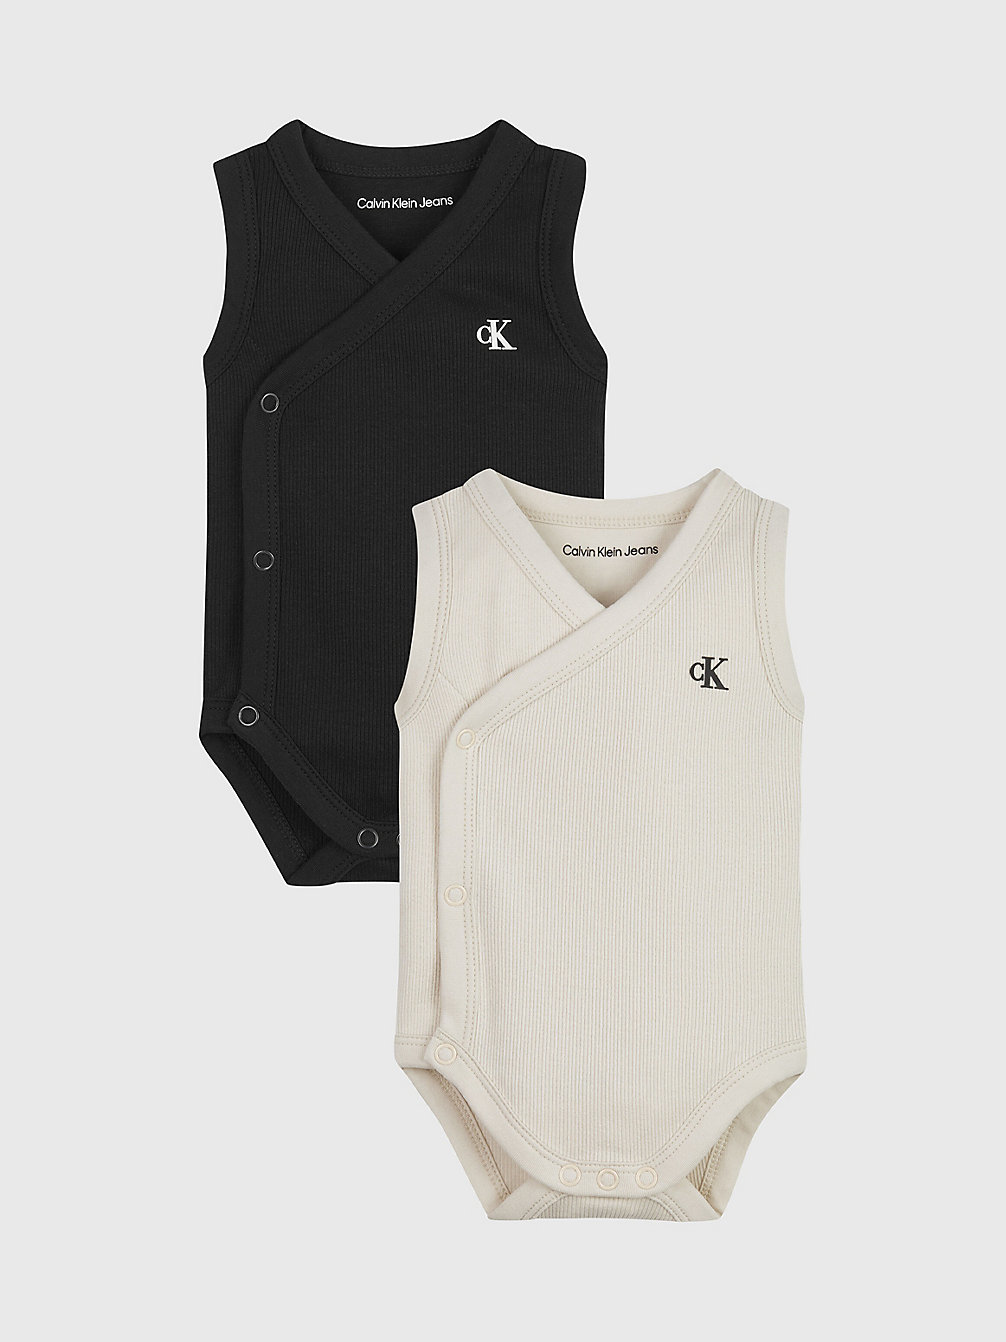 WHITE CAP GRAY / BLACK Newborn 2-Pack Sleeveless Bodysuit undefined newborn Calvin Klein